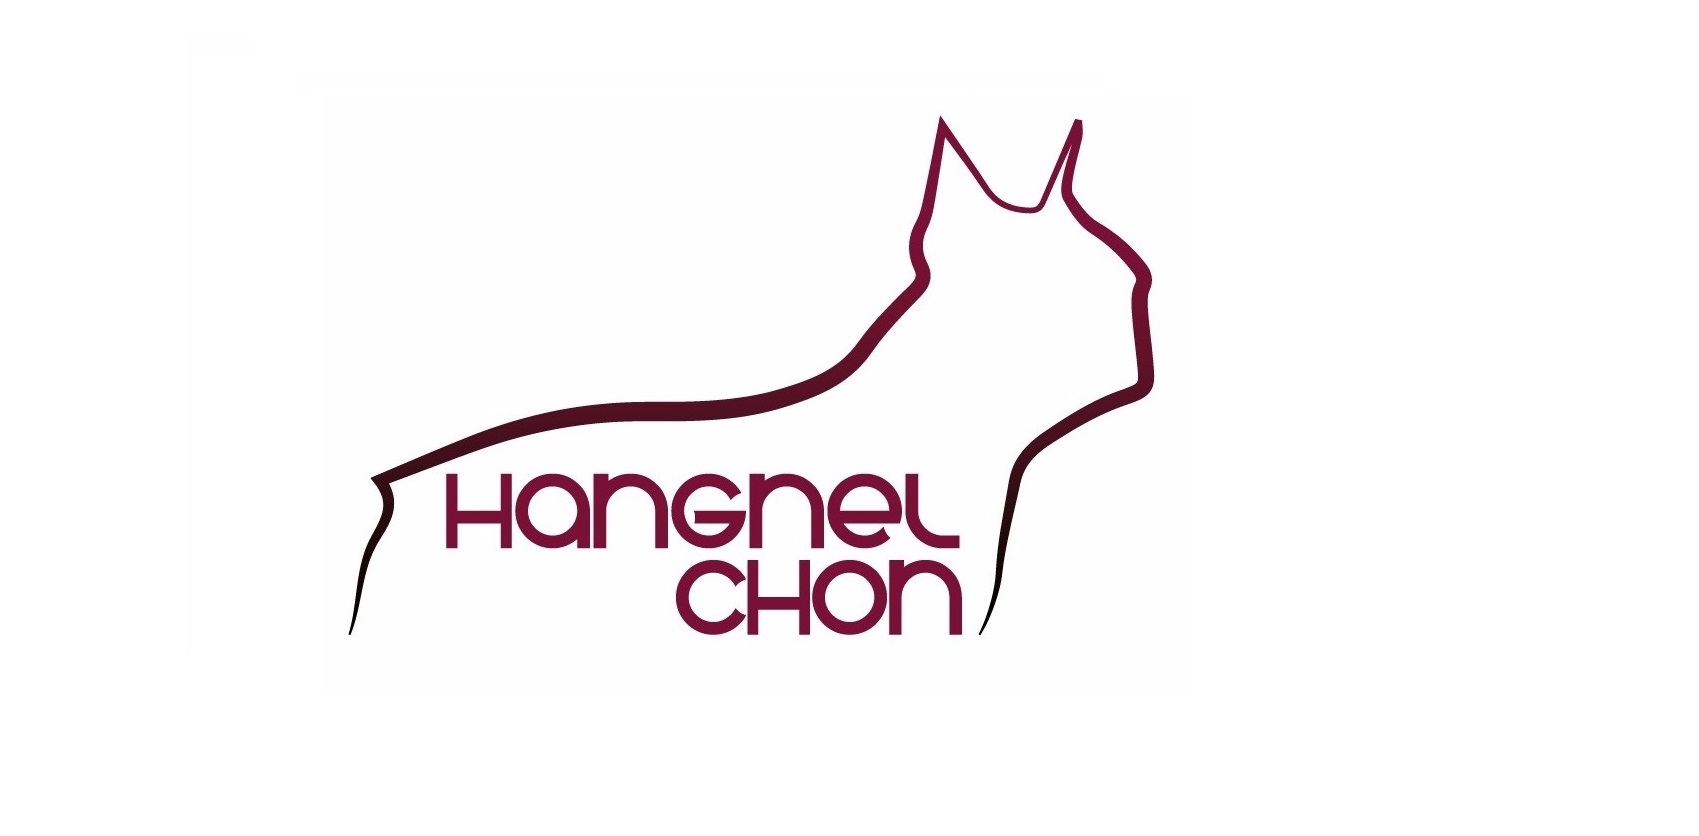 hangnel chon